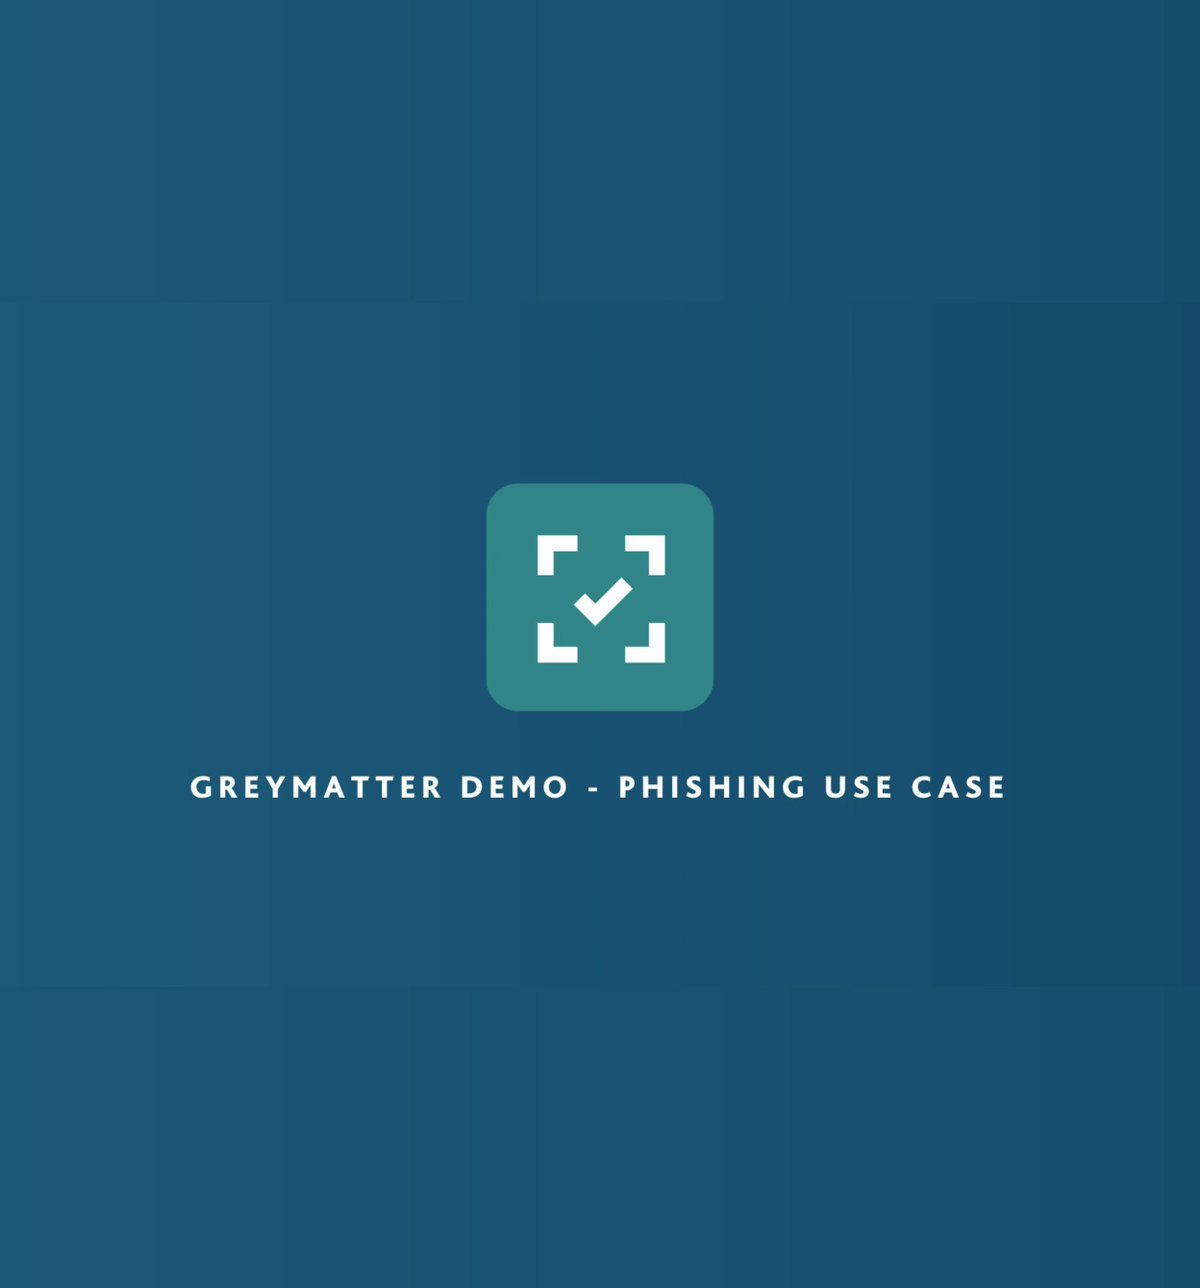 GreyMatter Demo - Phishing Use Case